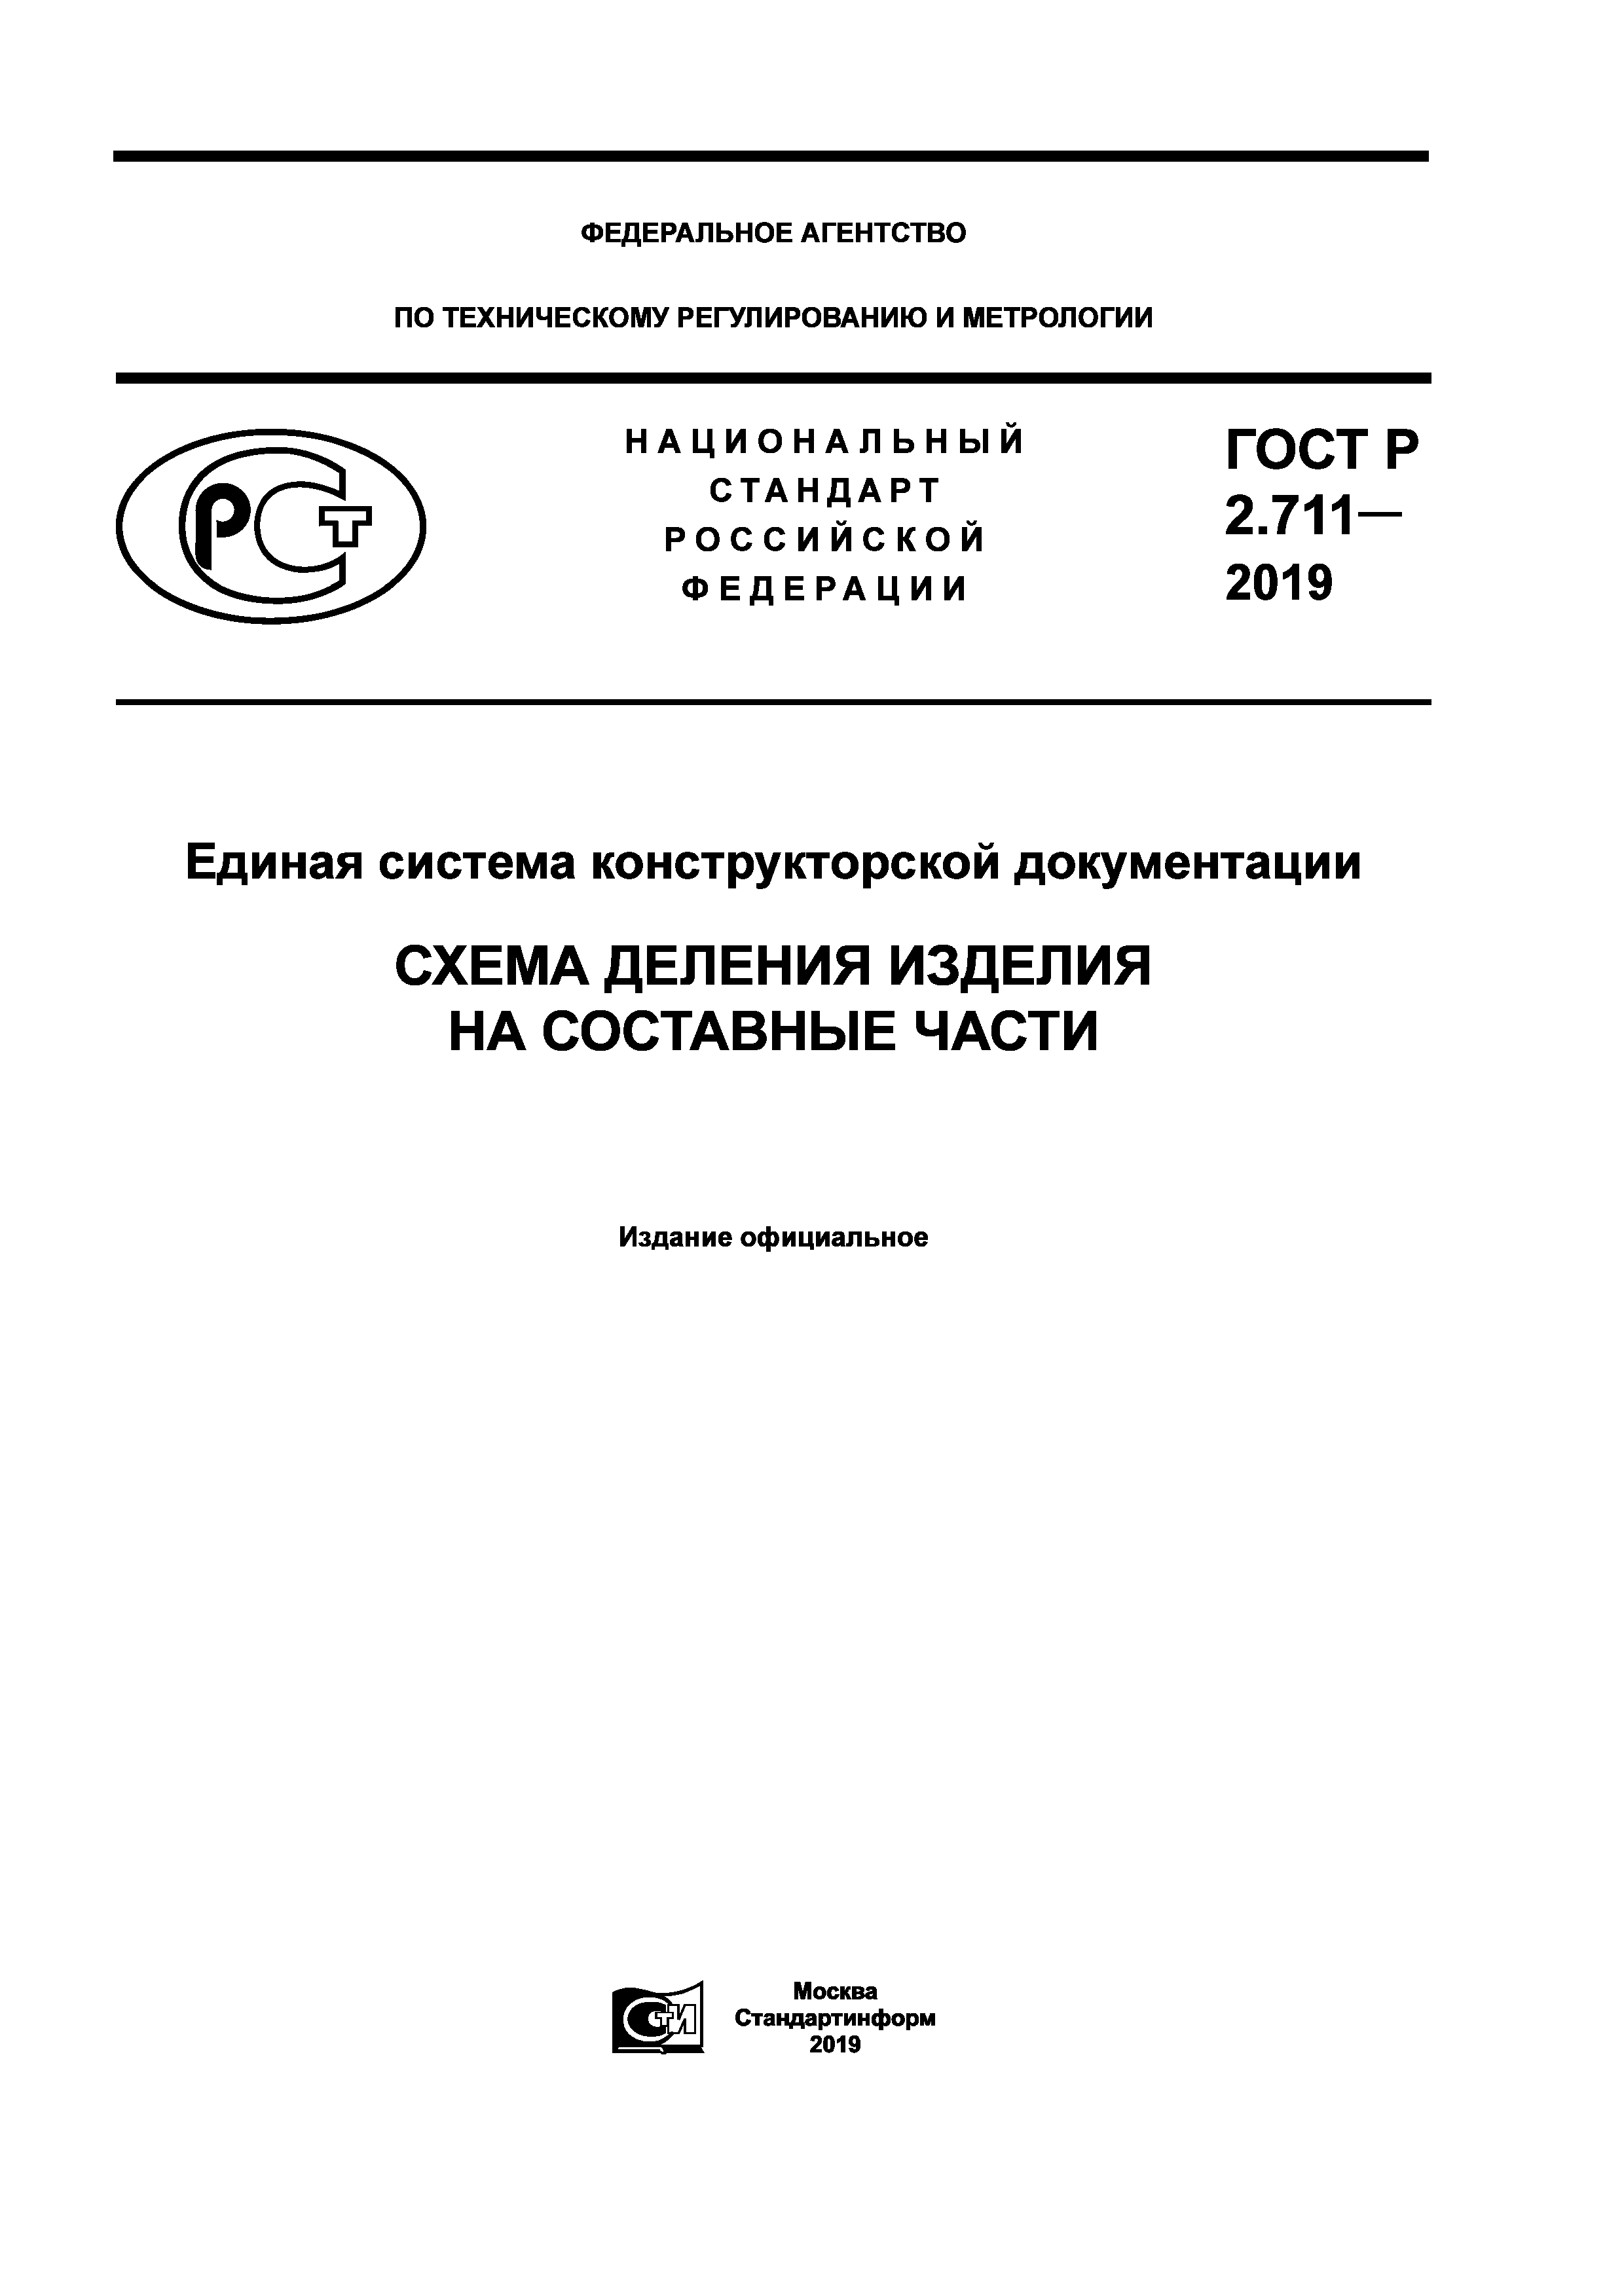 ГОСТ Р 2.711-2019